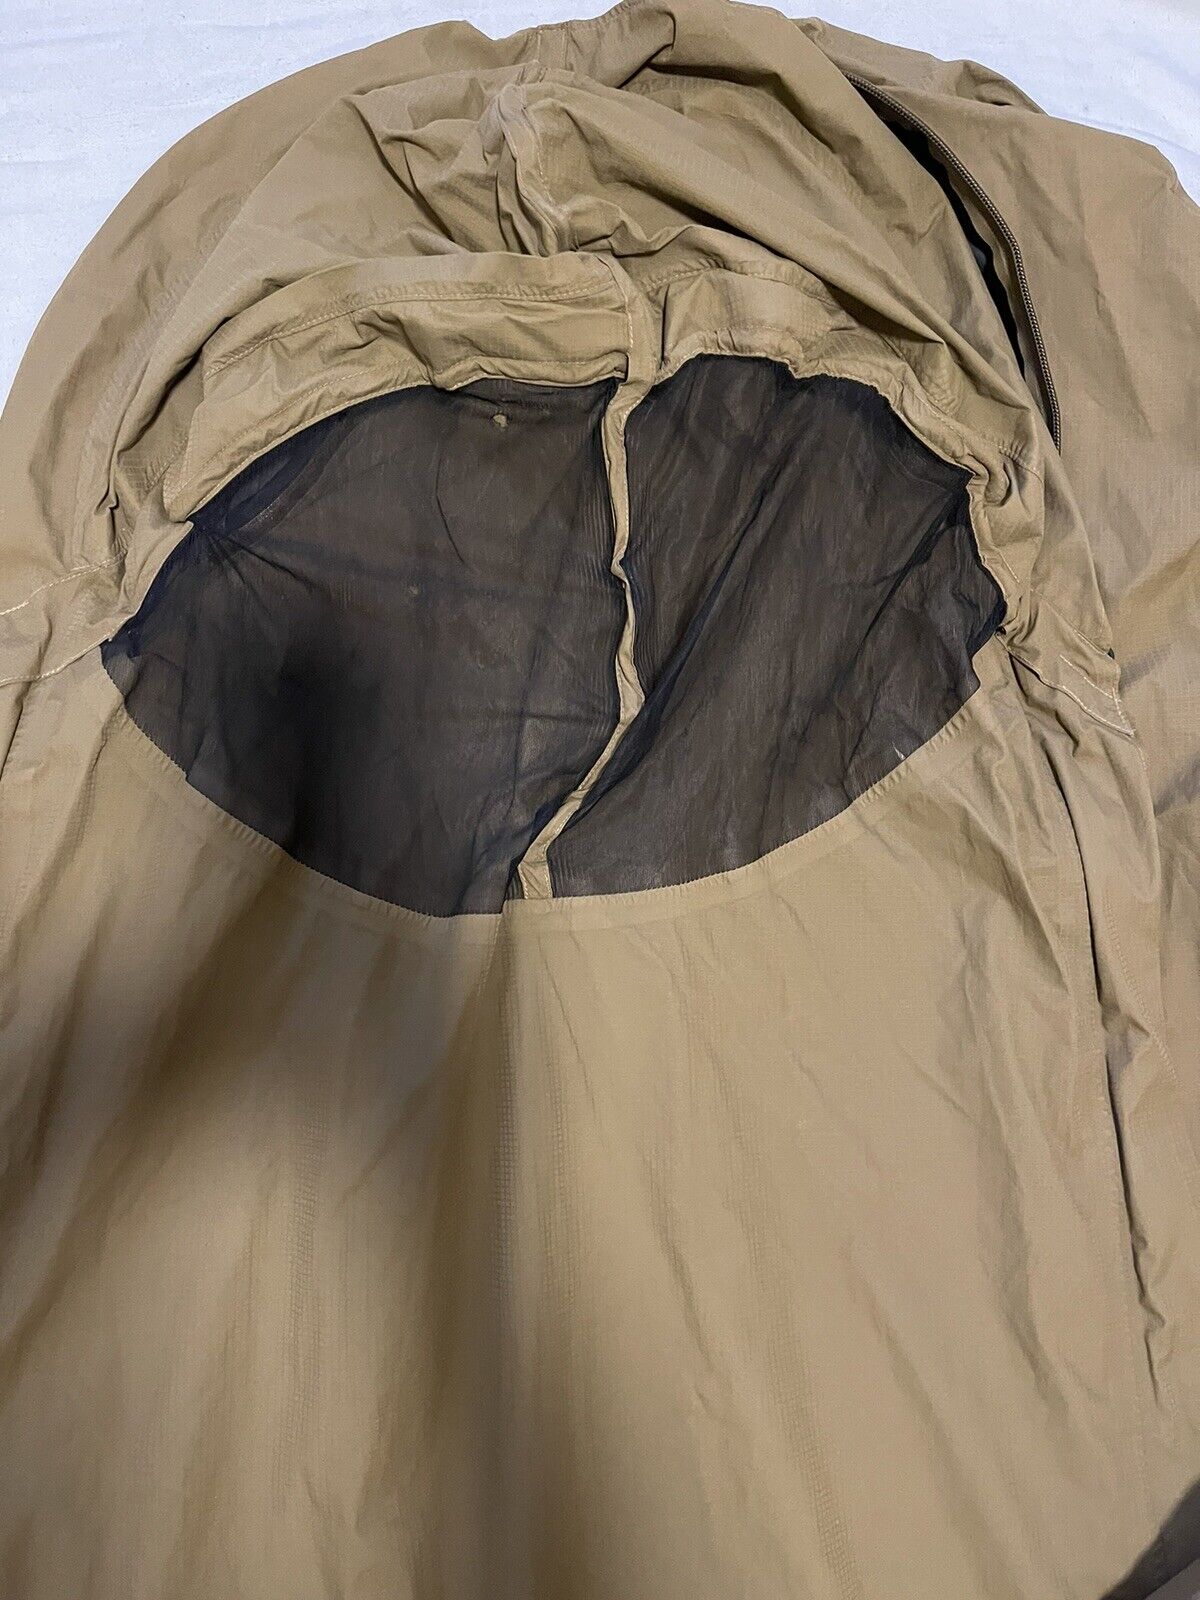 Marine Corps USMC Improved Bivy Coyote Brown/Tan Cover Waterproof Gortex